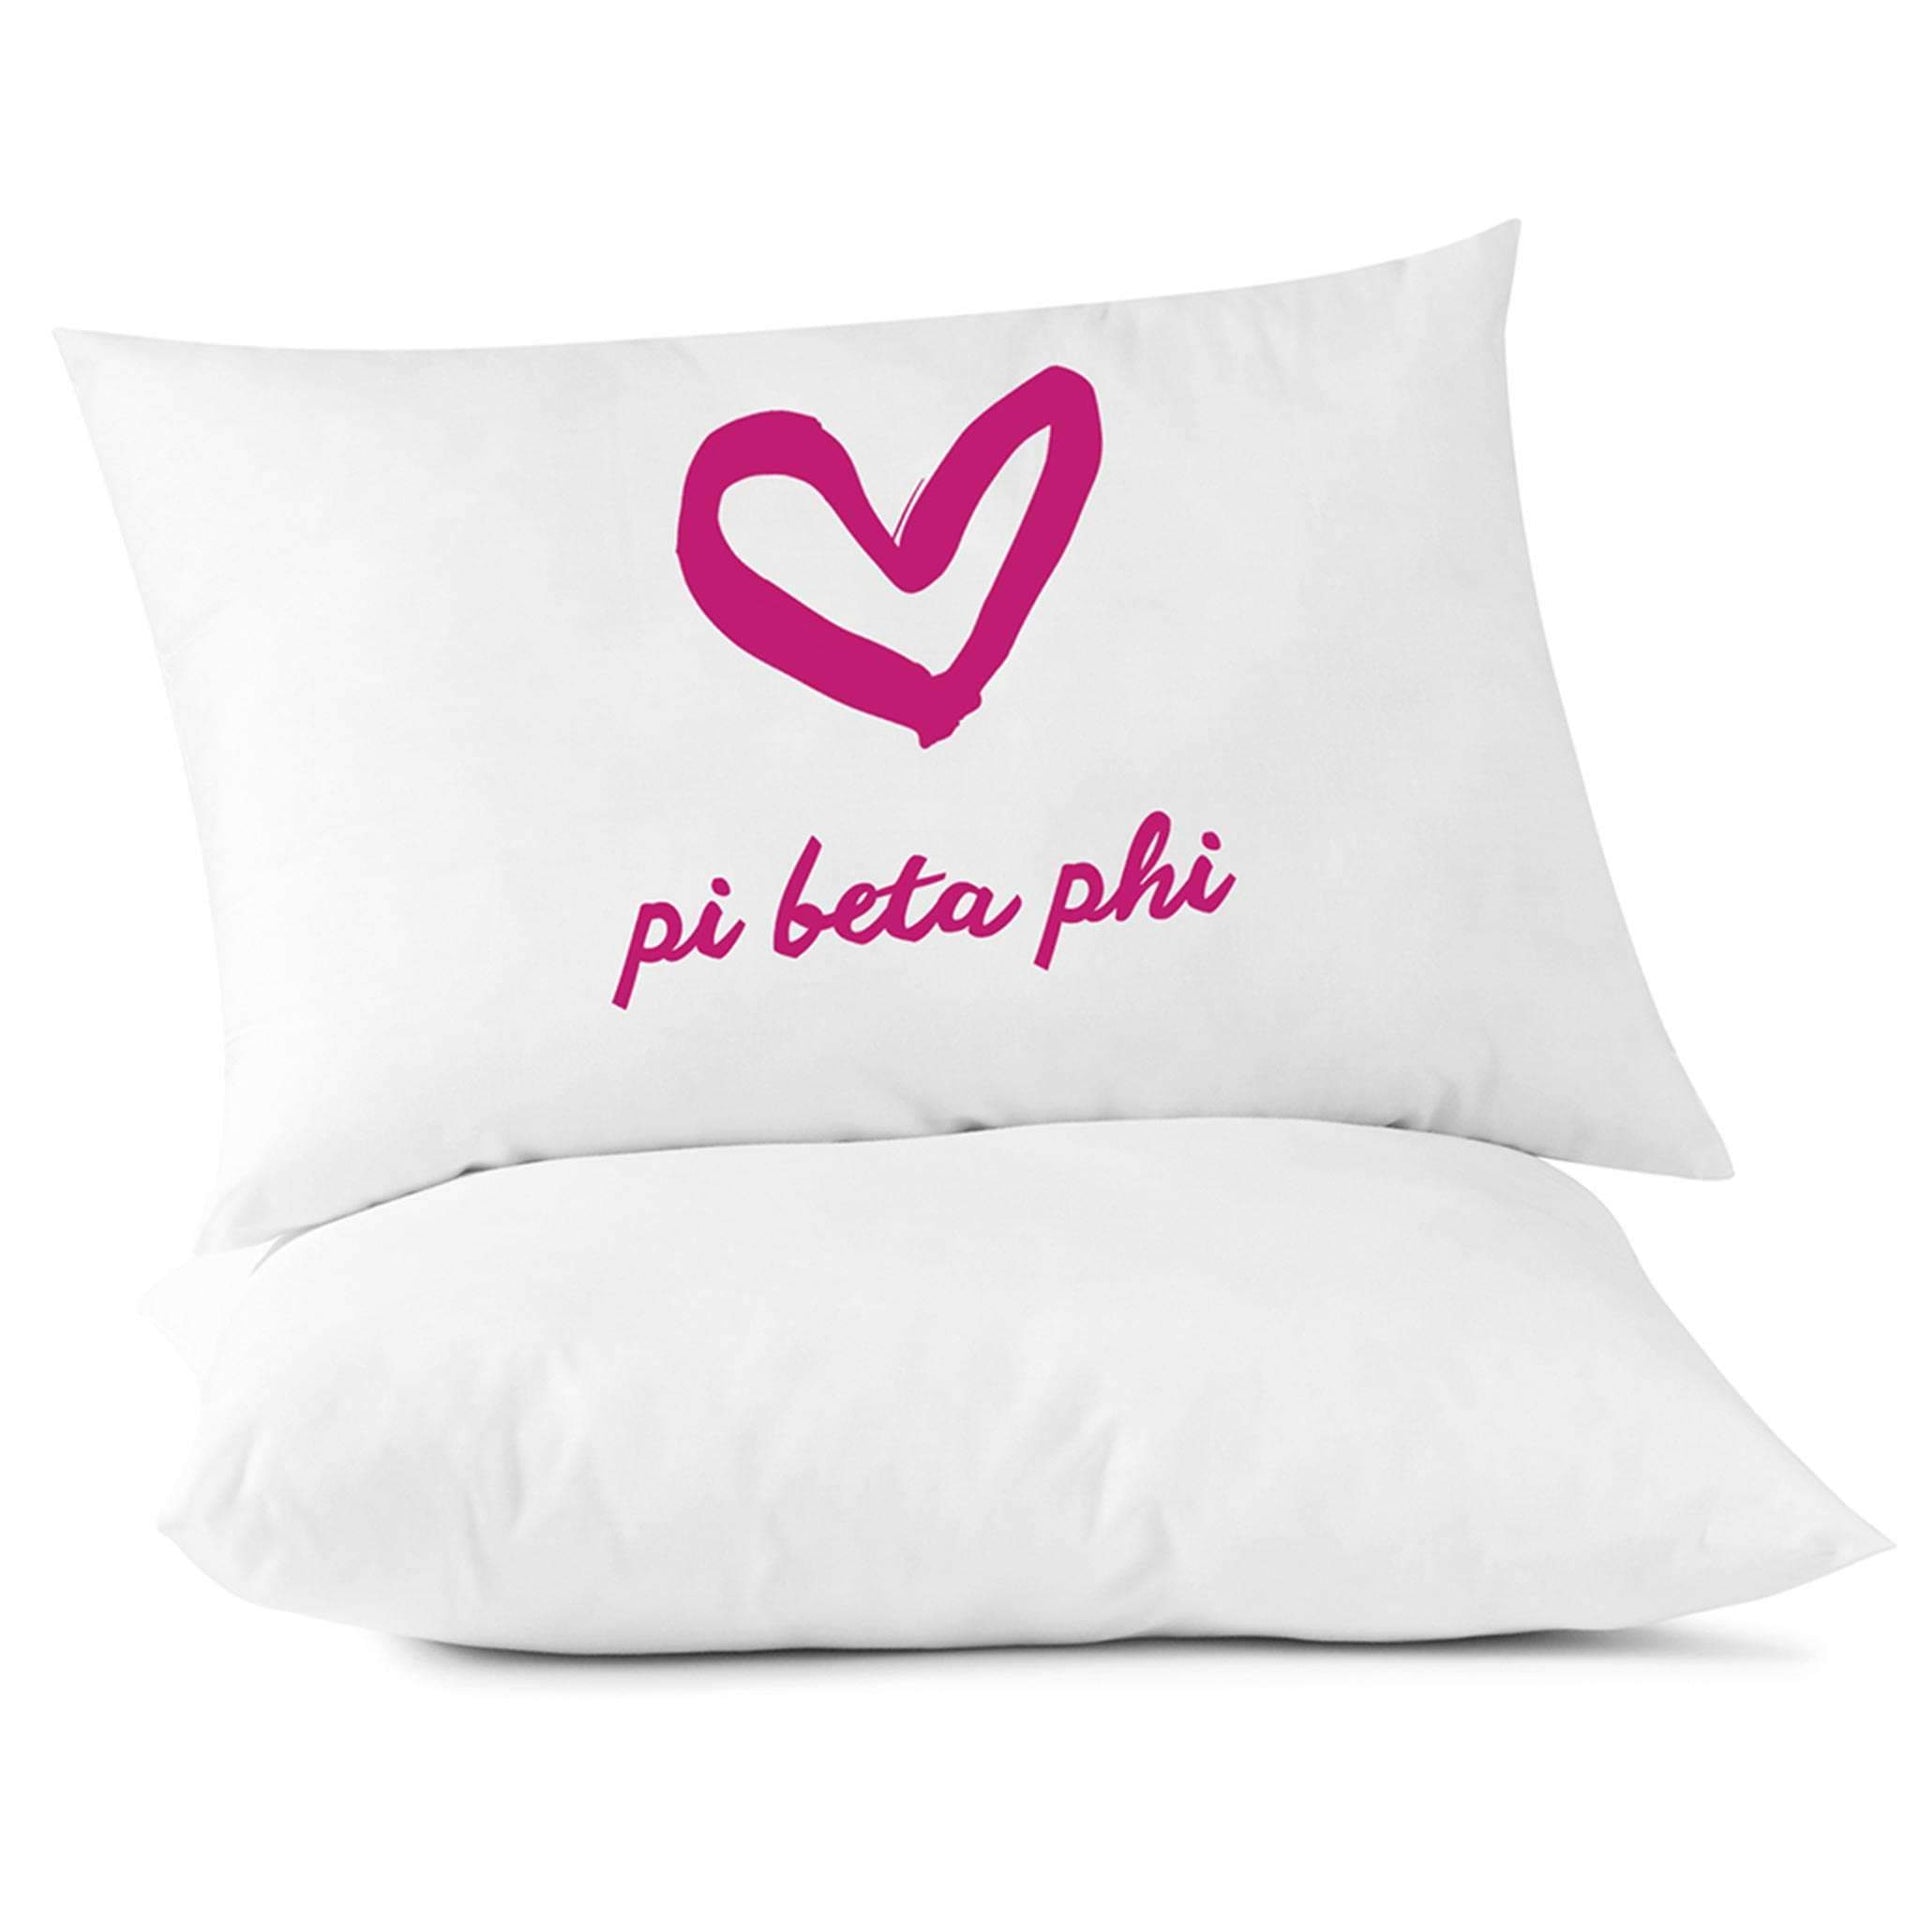 PBP sorority name with heart design custom printed on pillowcase.